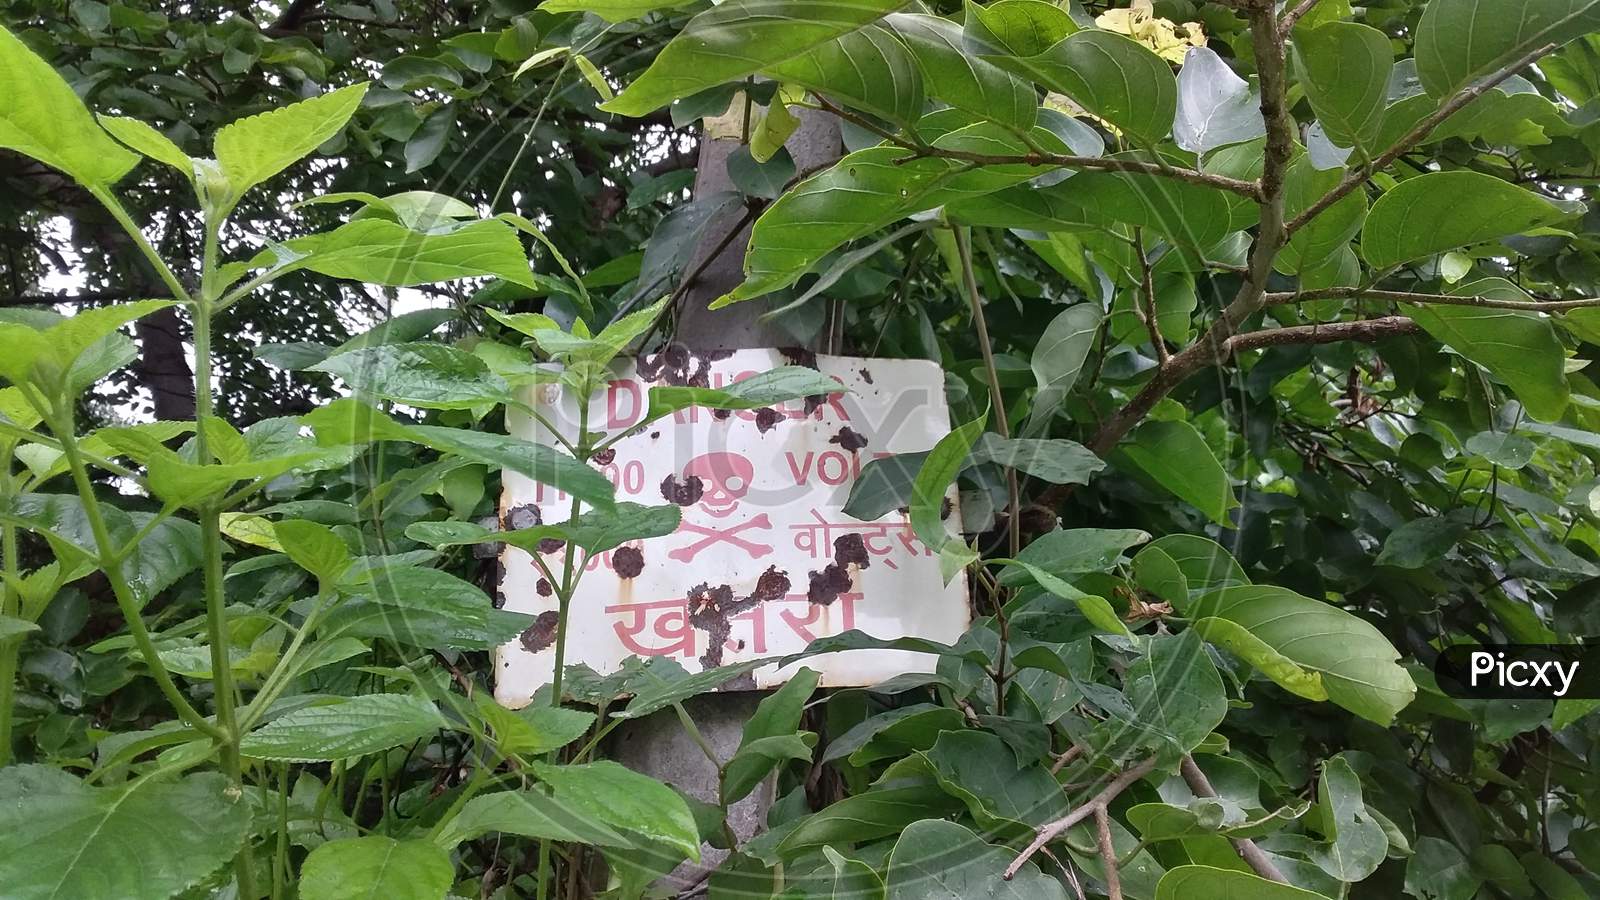 danger symbol board in jungle